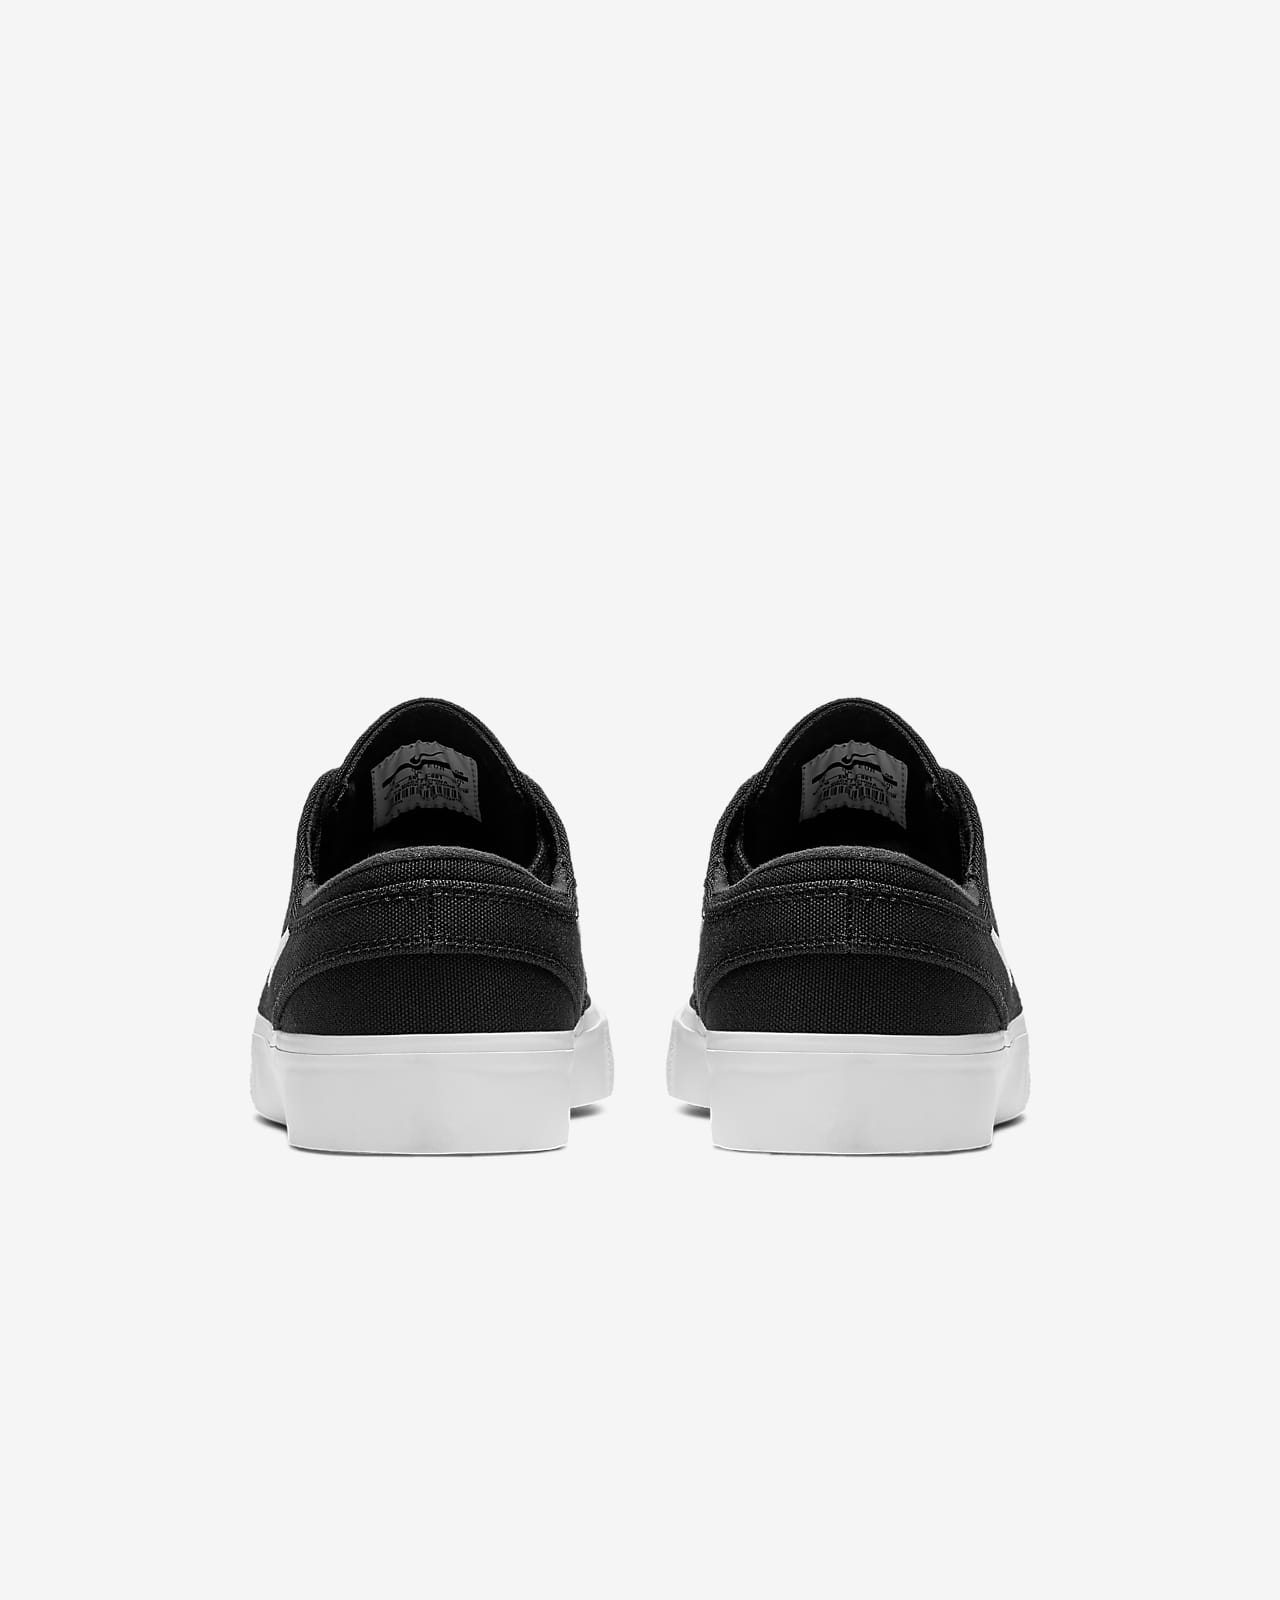 nike sb janoski rm black & white canvas skate shoes